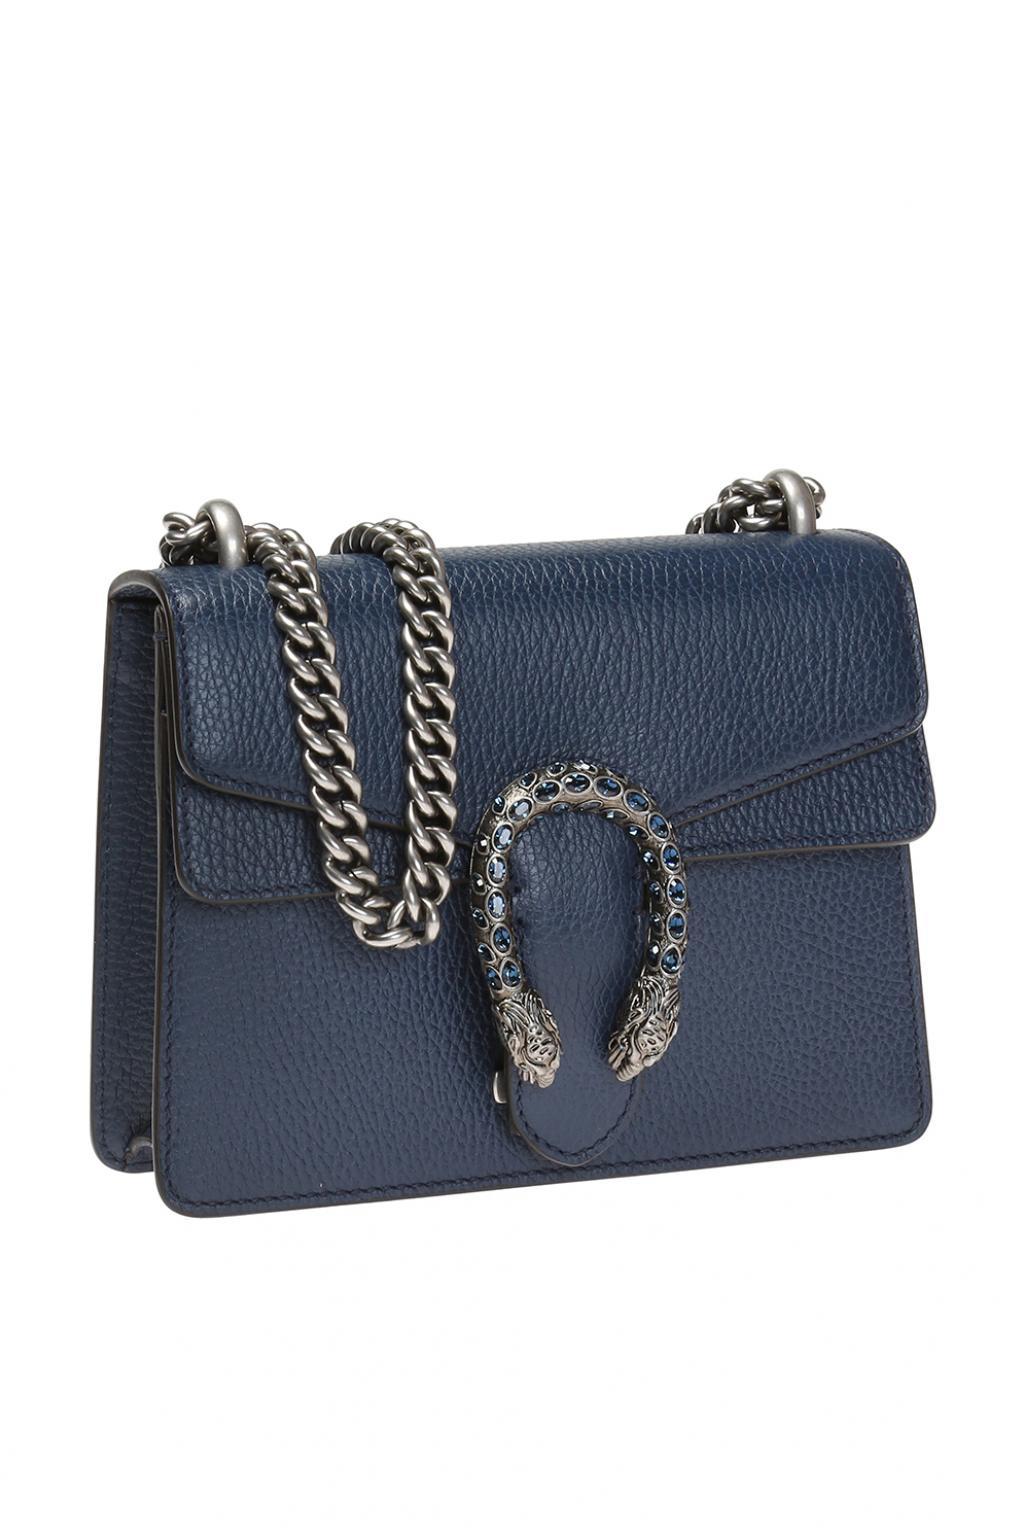 Gucci Leather &#39;dionysus&#39; Shoulder Bag in Navy Blue (Blue) - Lyst